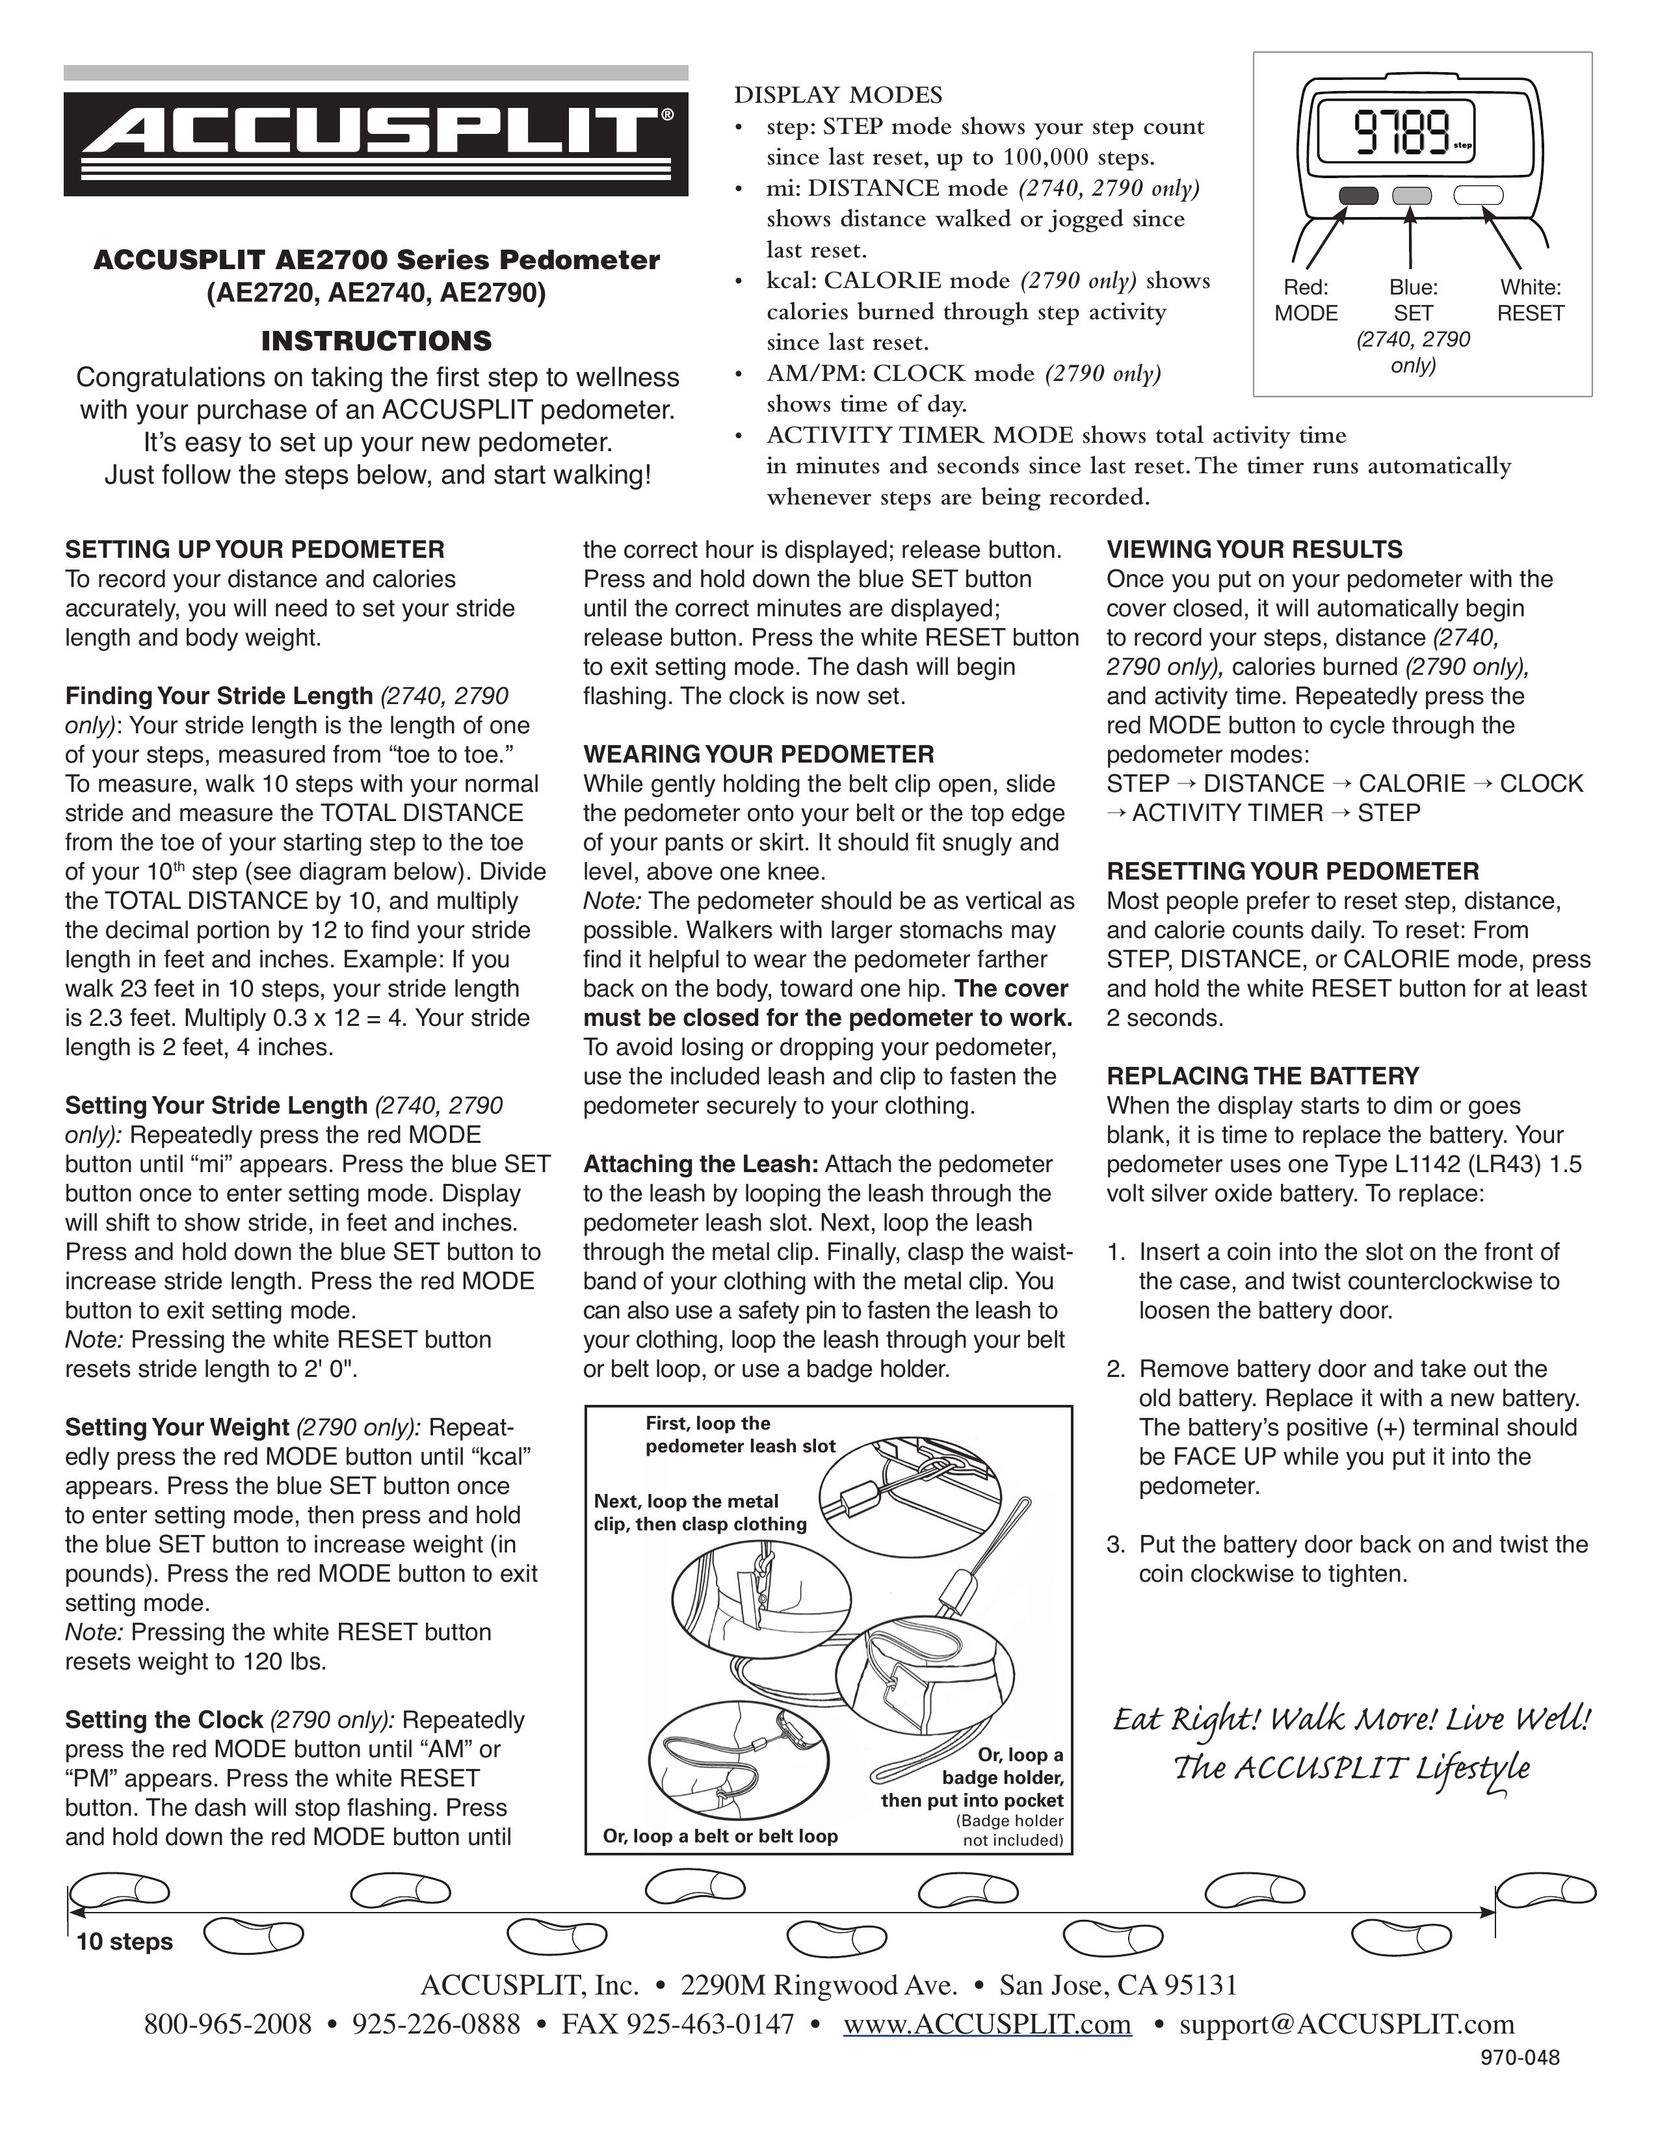 Accusplit AE2720 Headphones User Manual (Page 1)